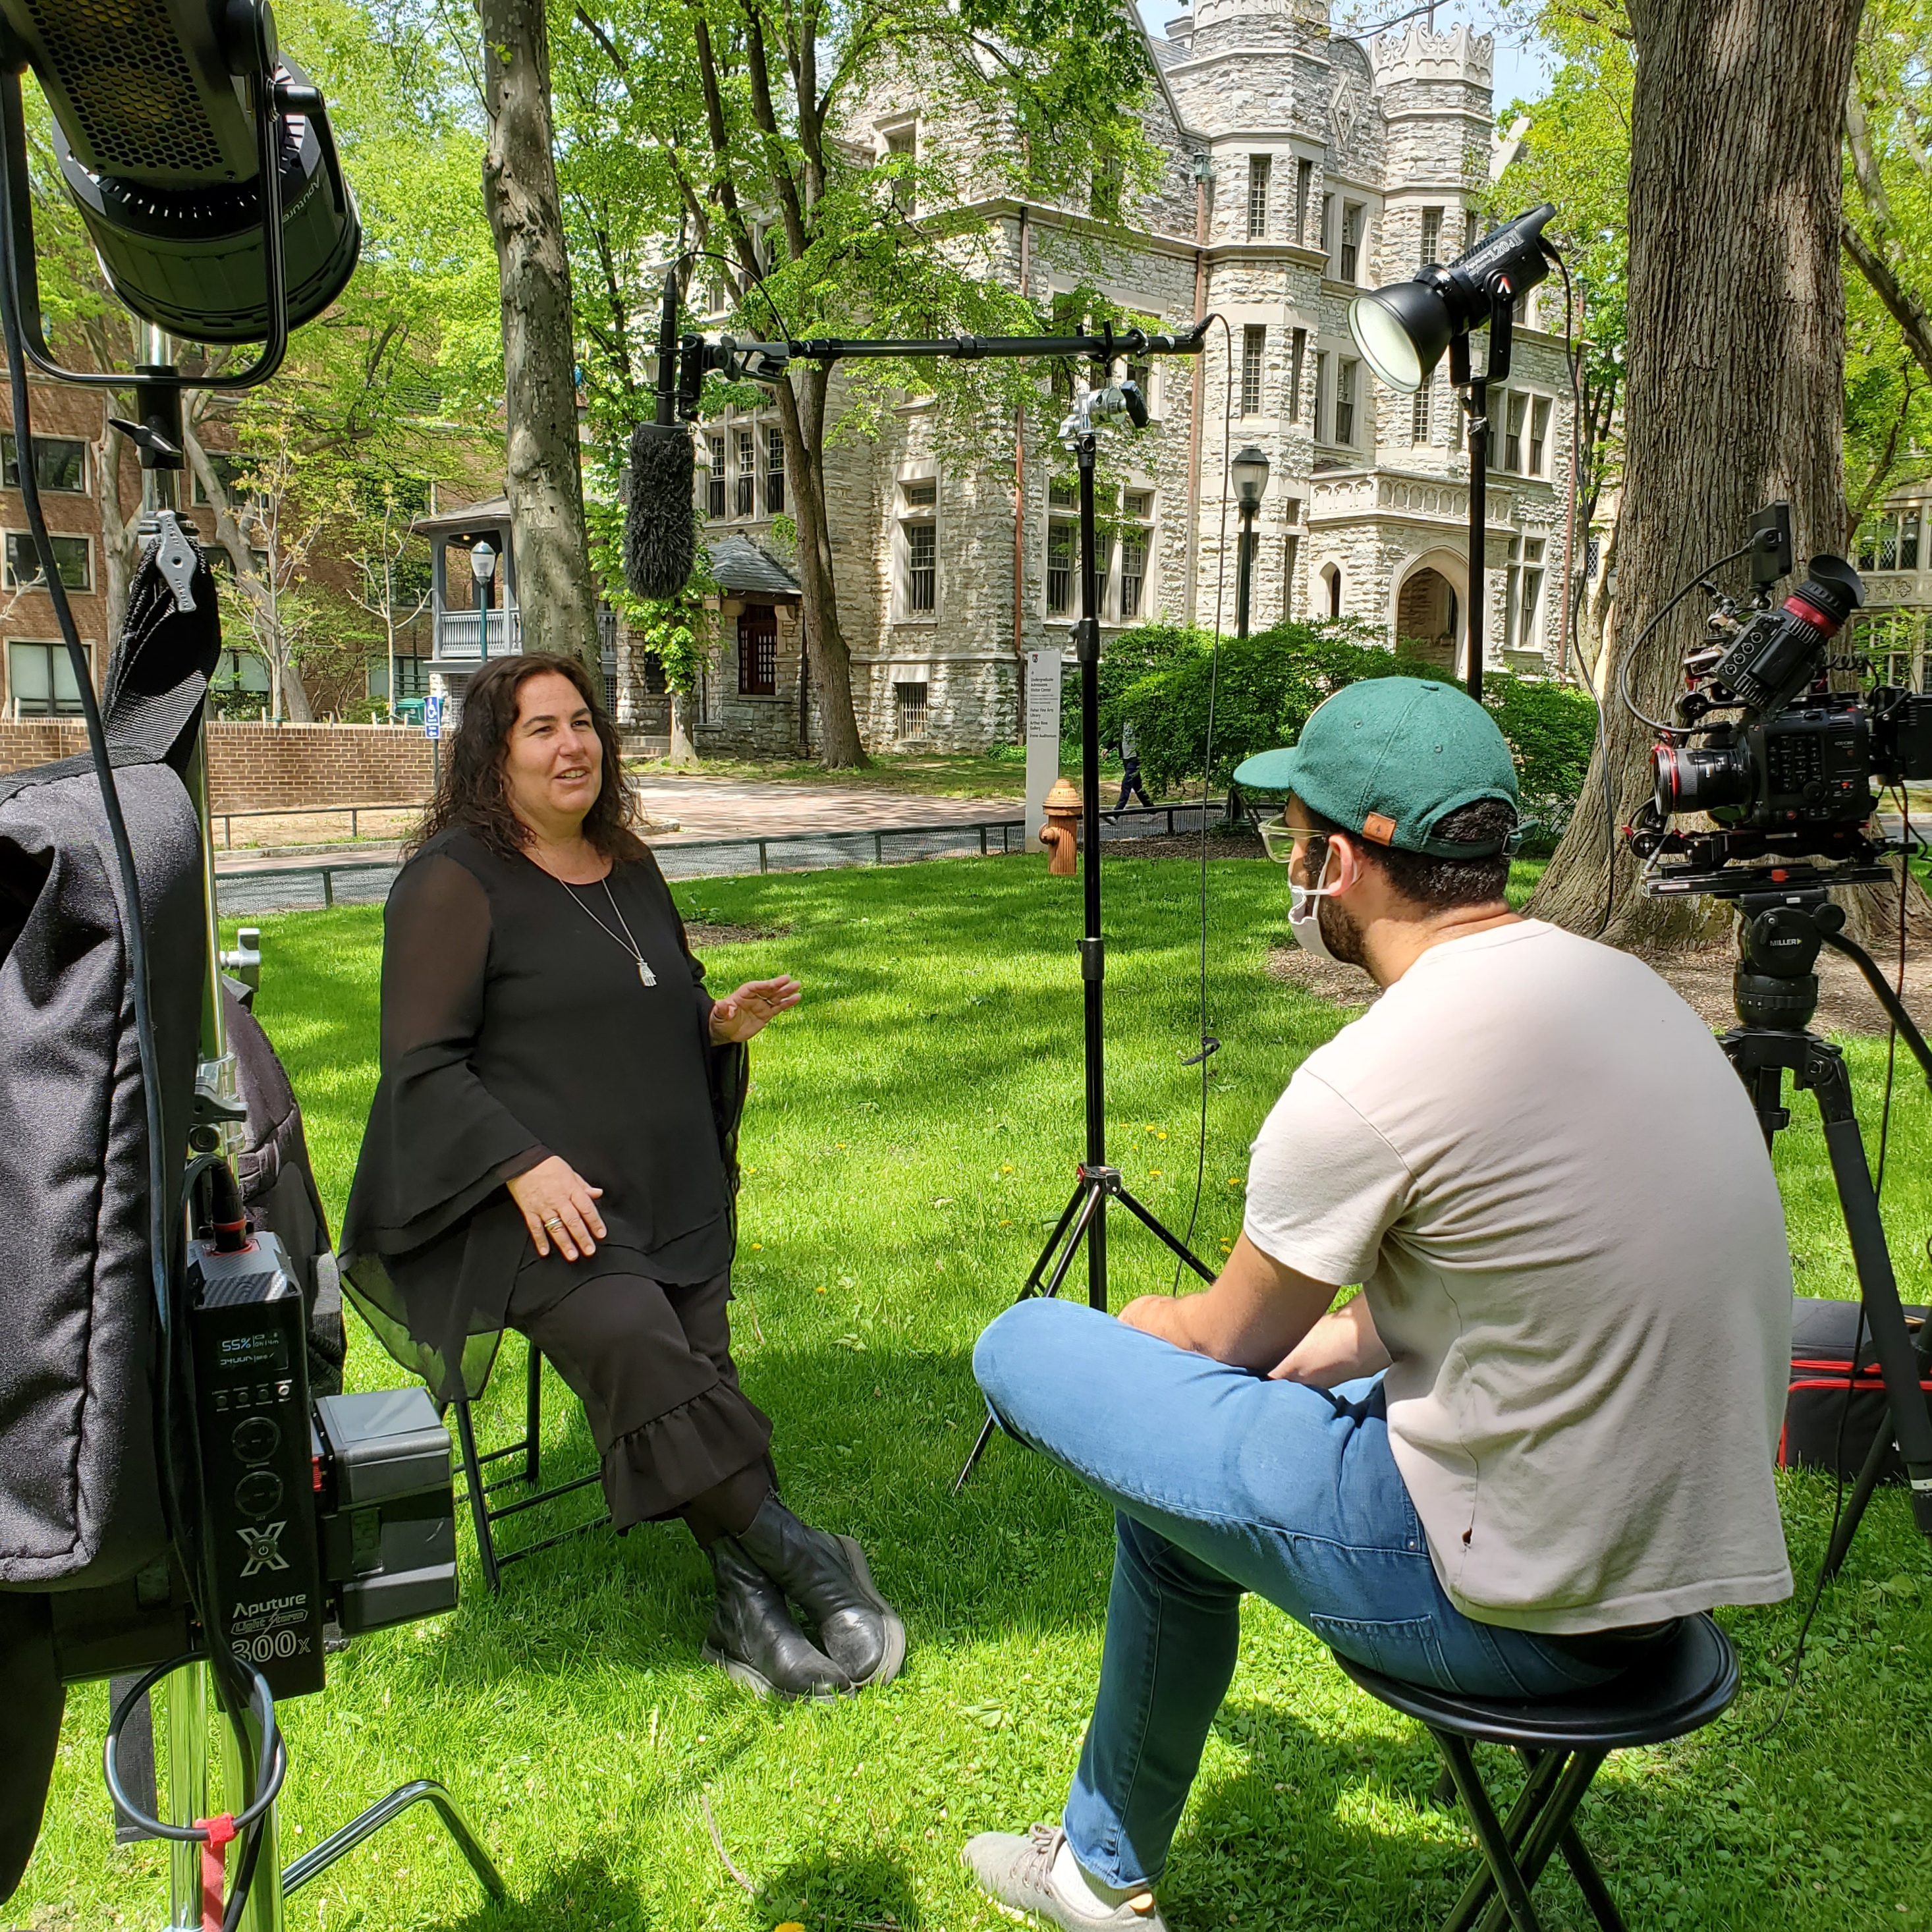 Karen Shaffran being interviewed and filmed by media crew on U Penn campus.